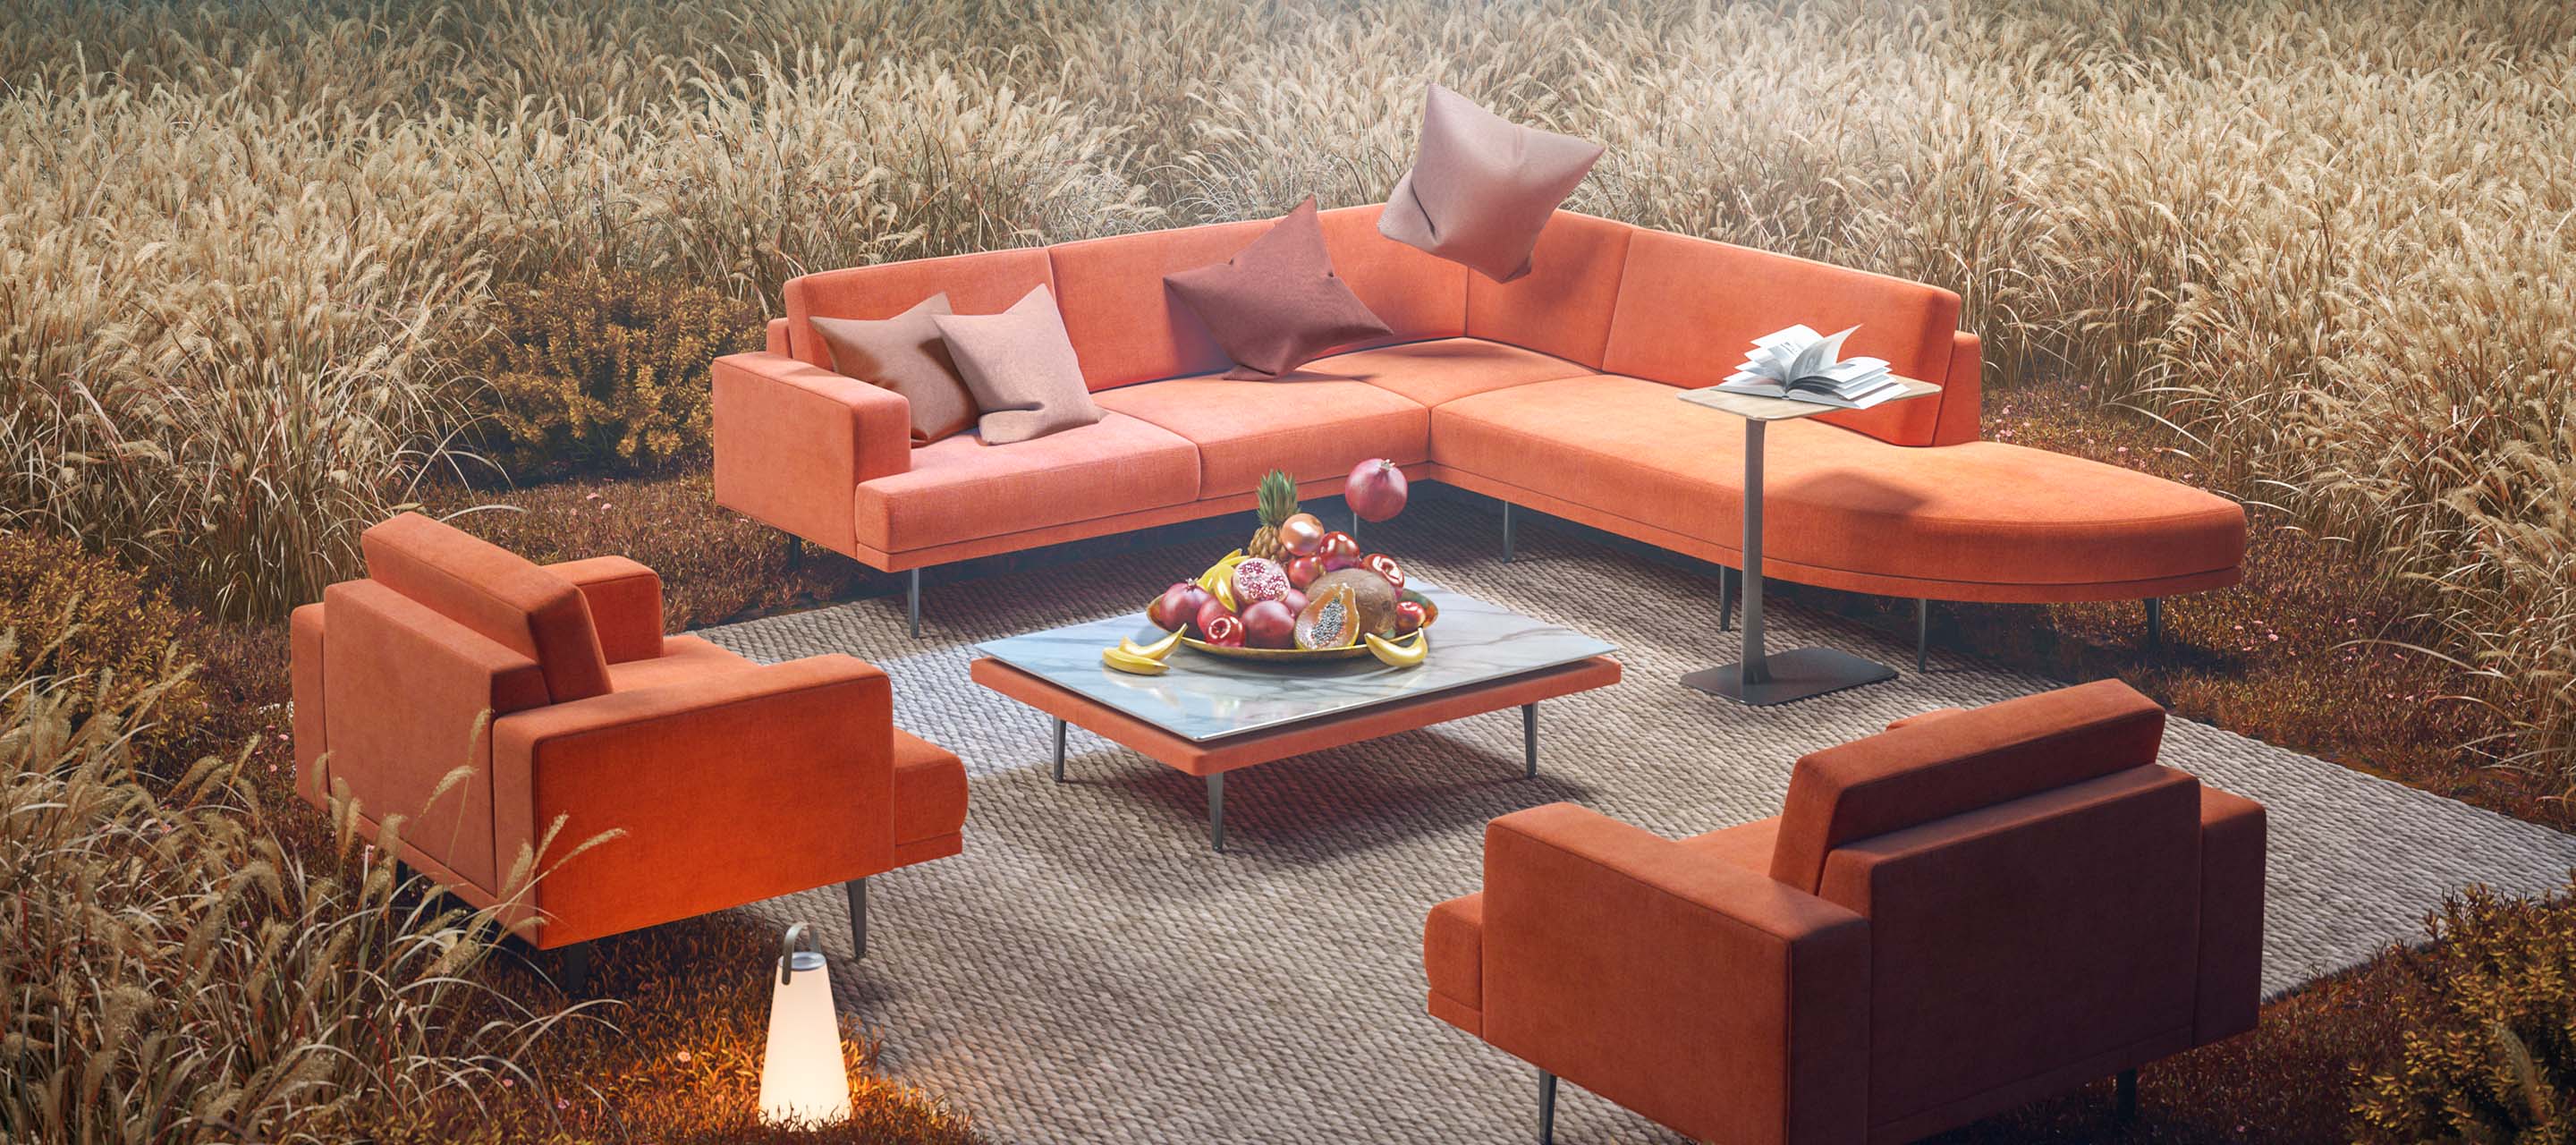 Haworth Lyda lounge in orange upholstery